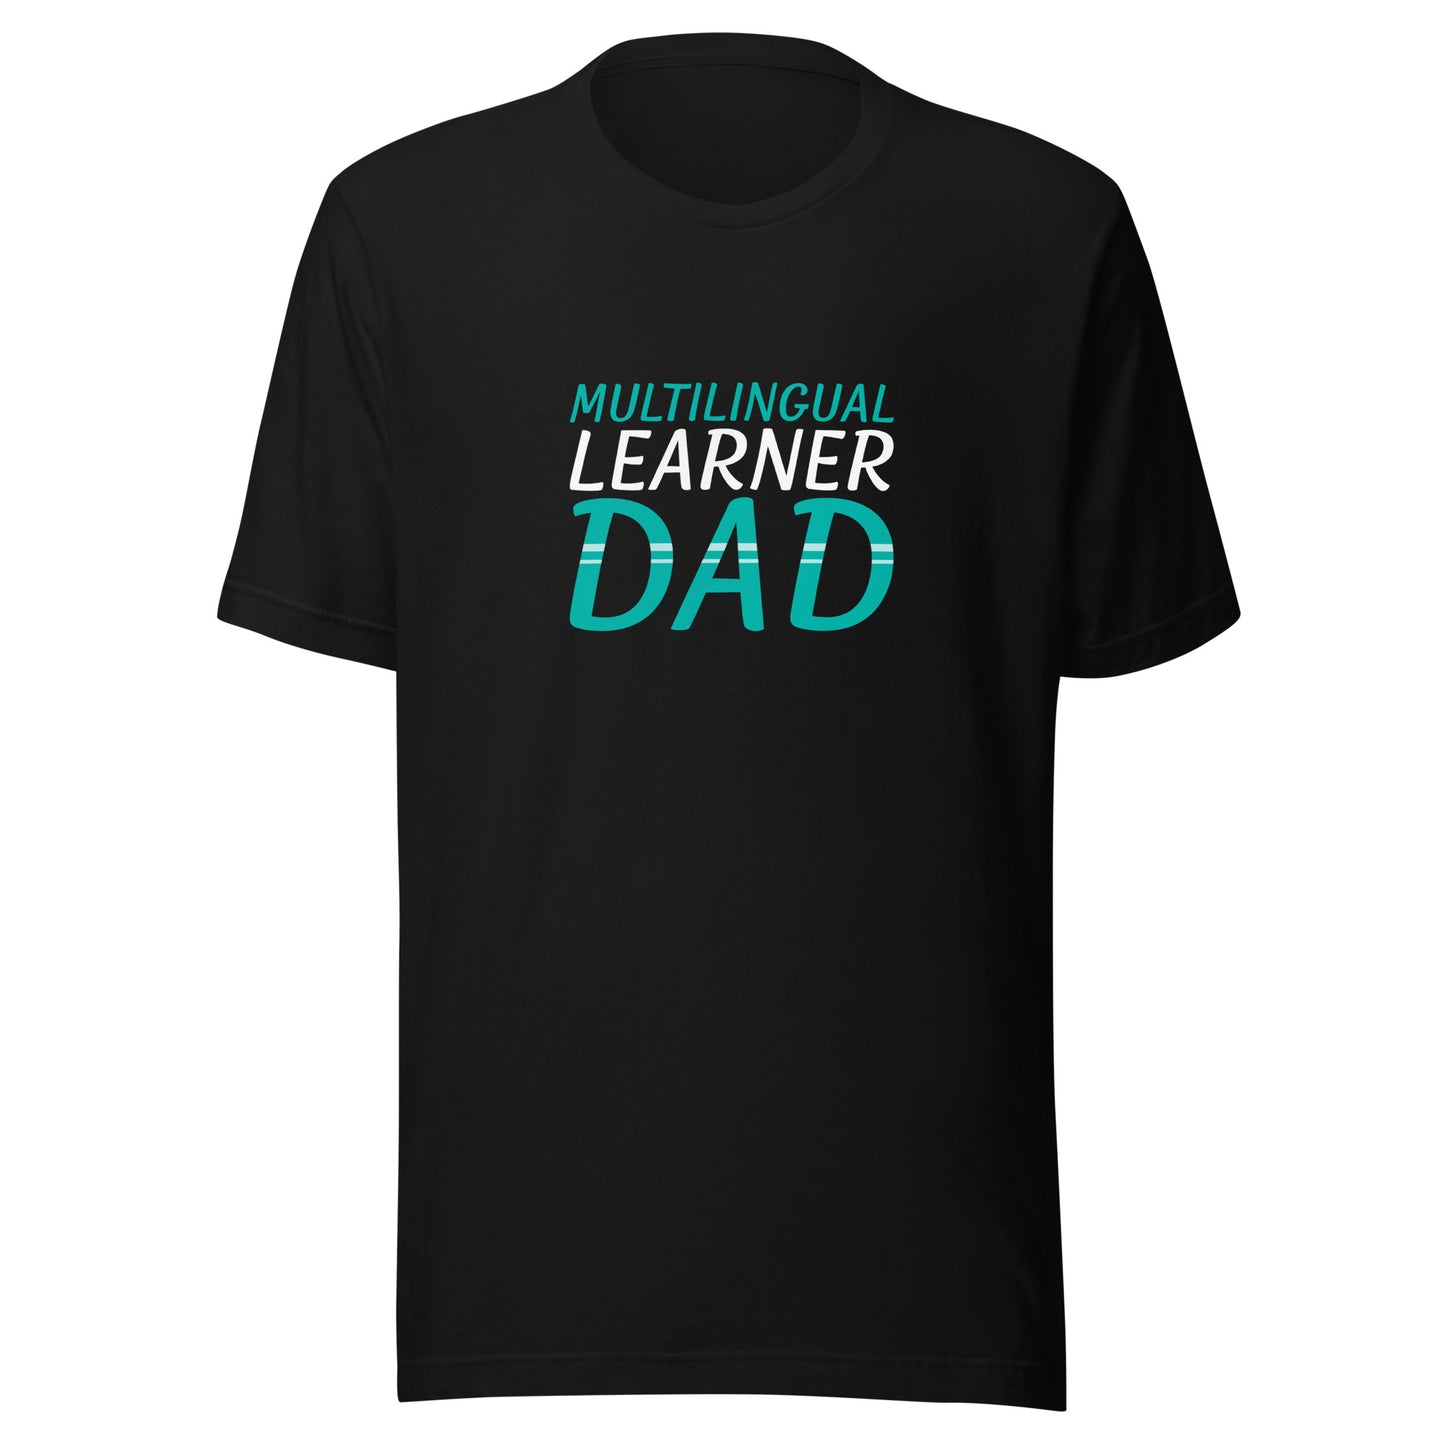 Multilingual learner DAD t-shirt.